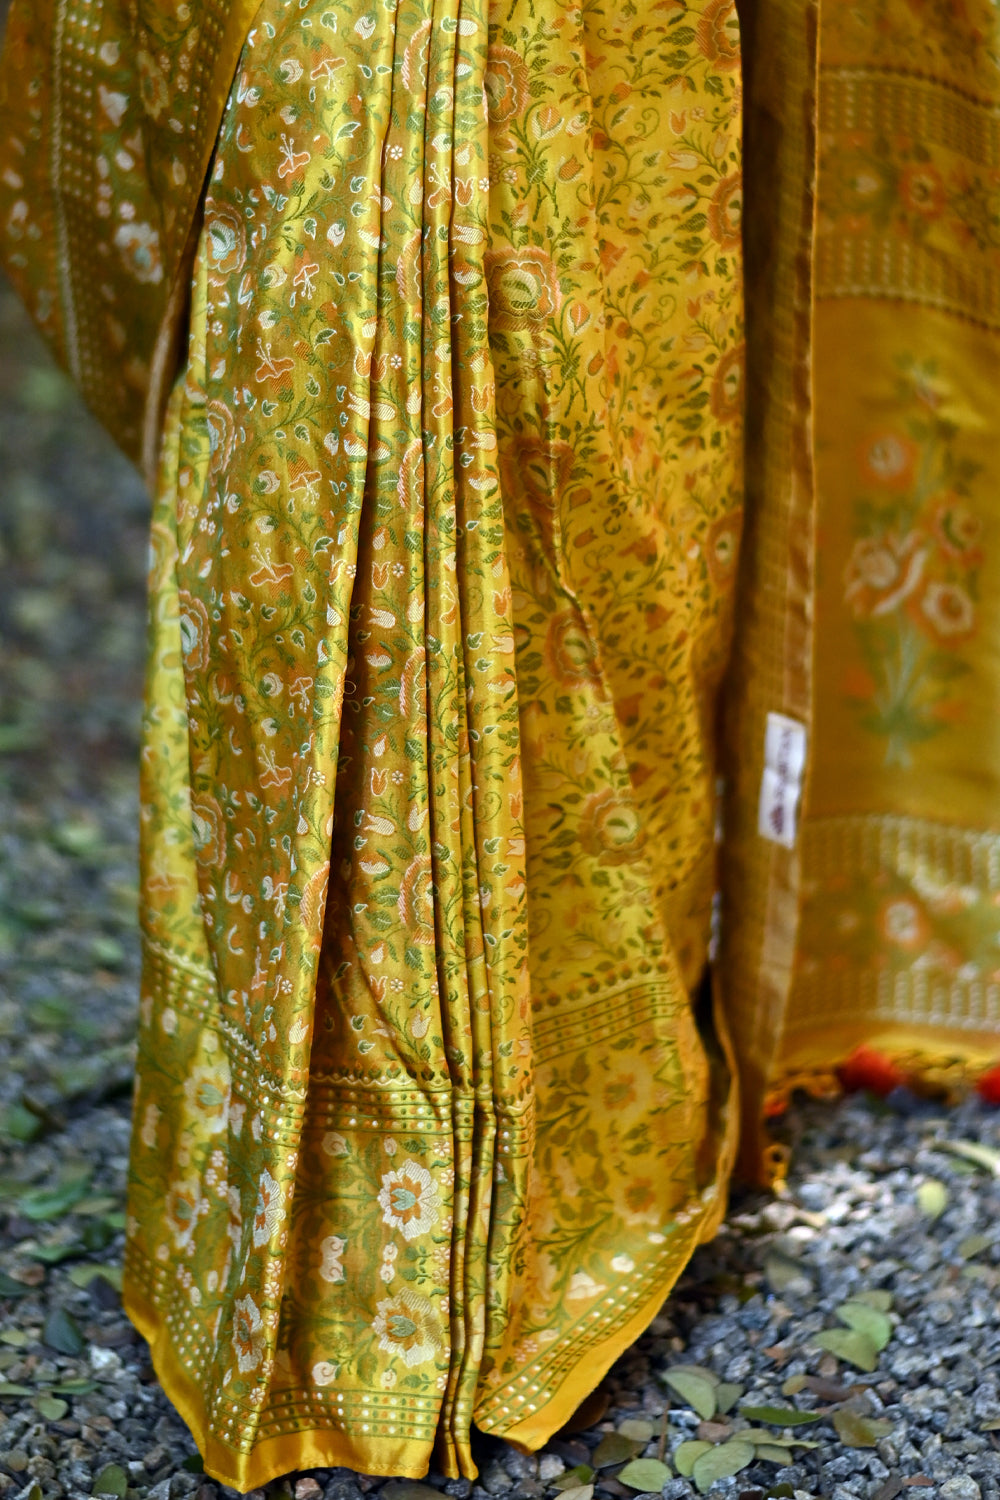 Tanchoi Floral Banarasi Saree in Pure Silk Satin in Mustard Yellow | SILK MARK CERTIFIED